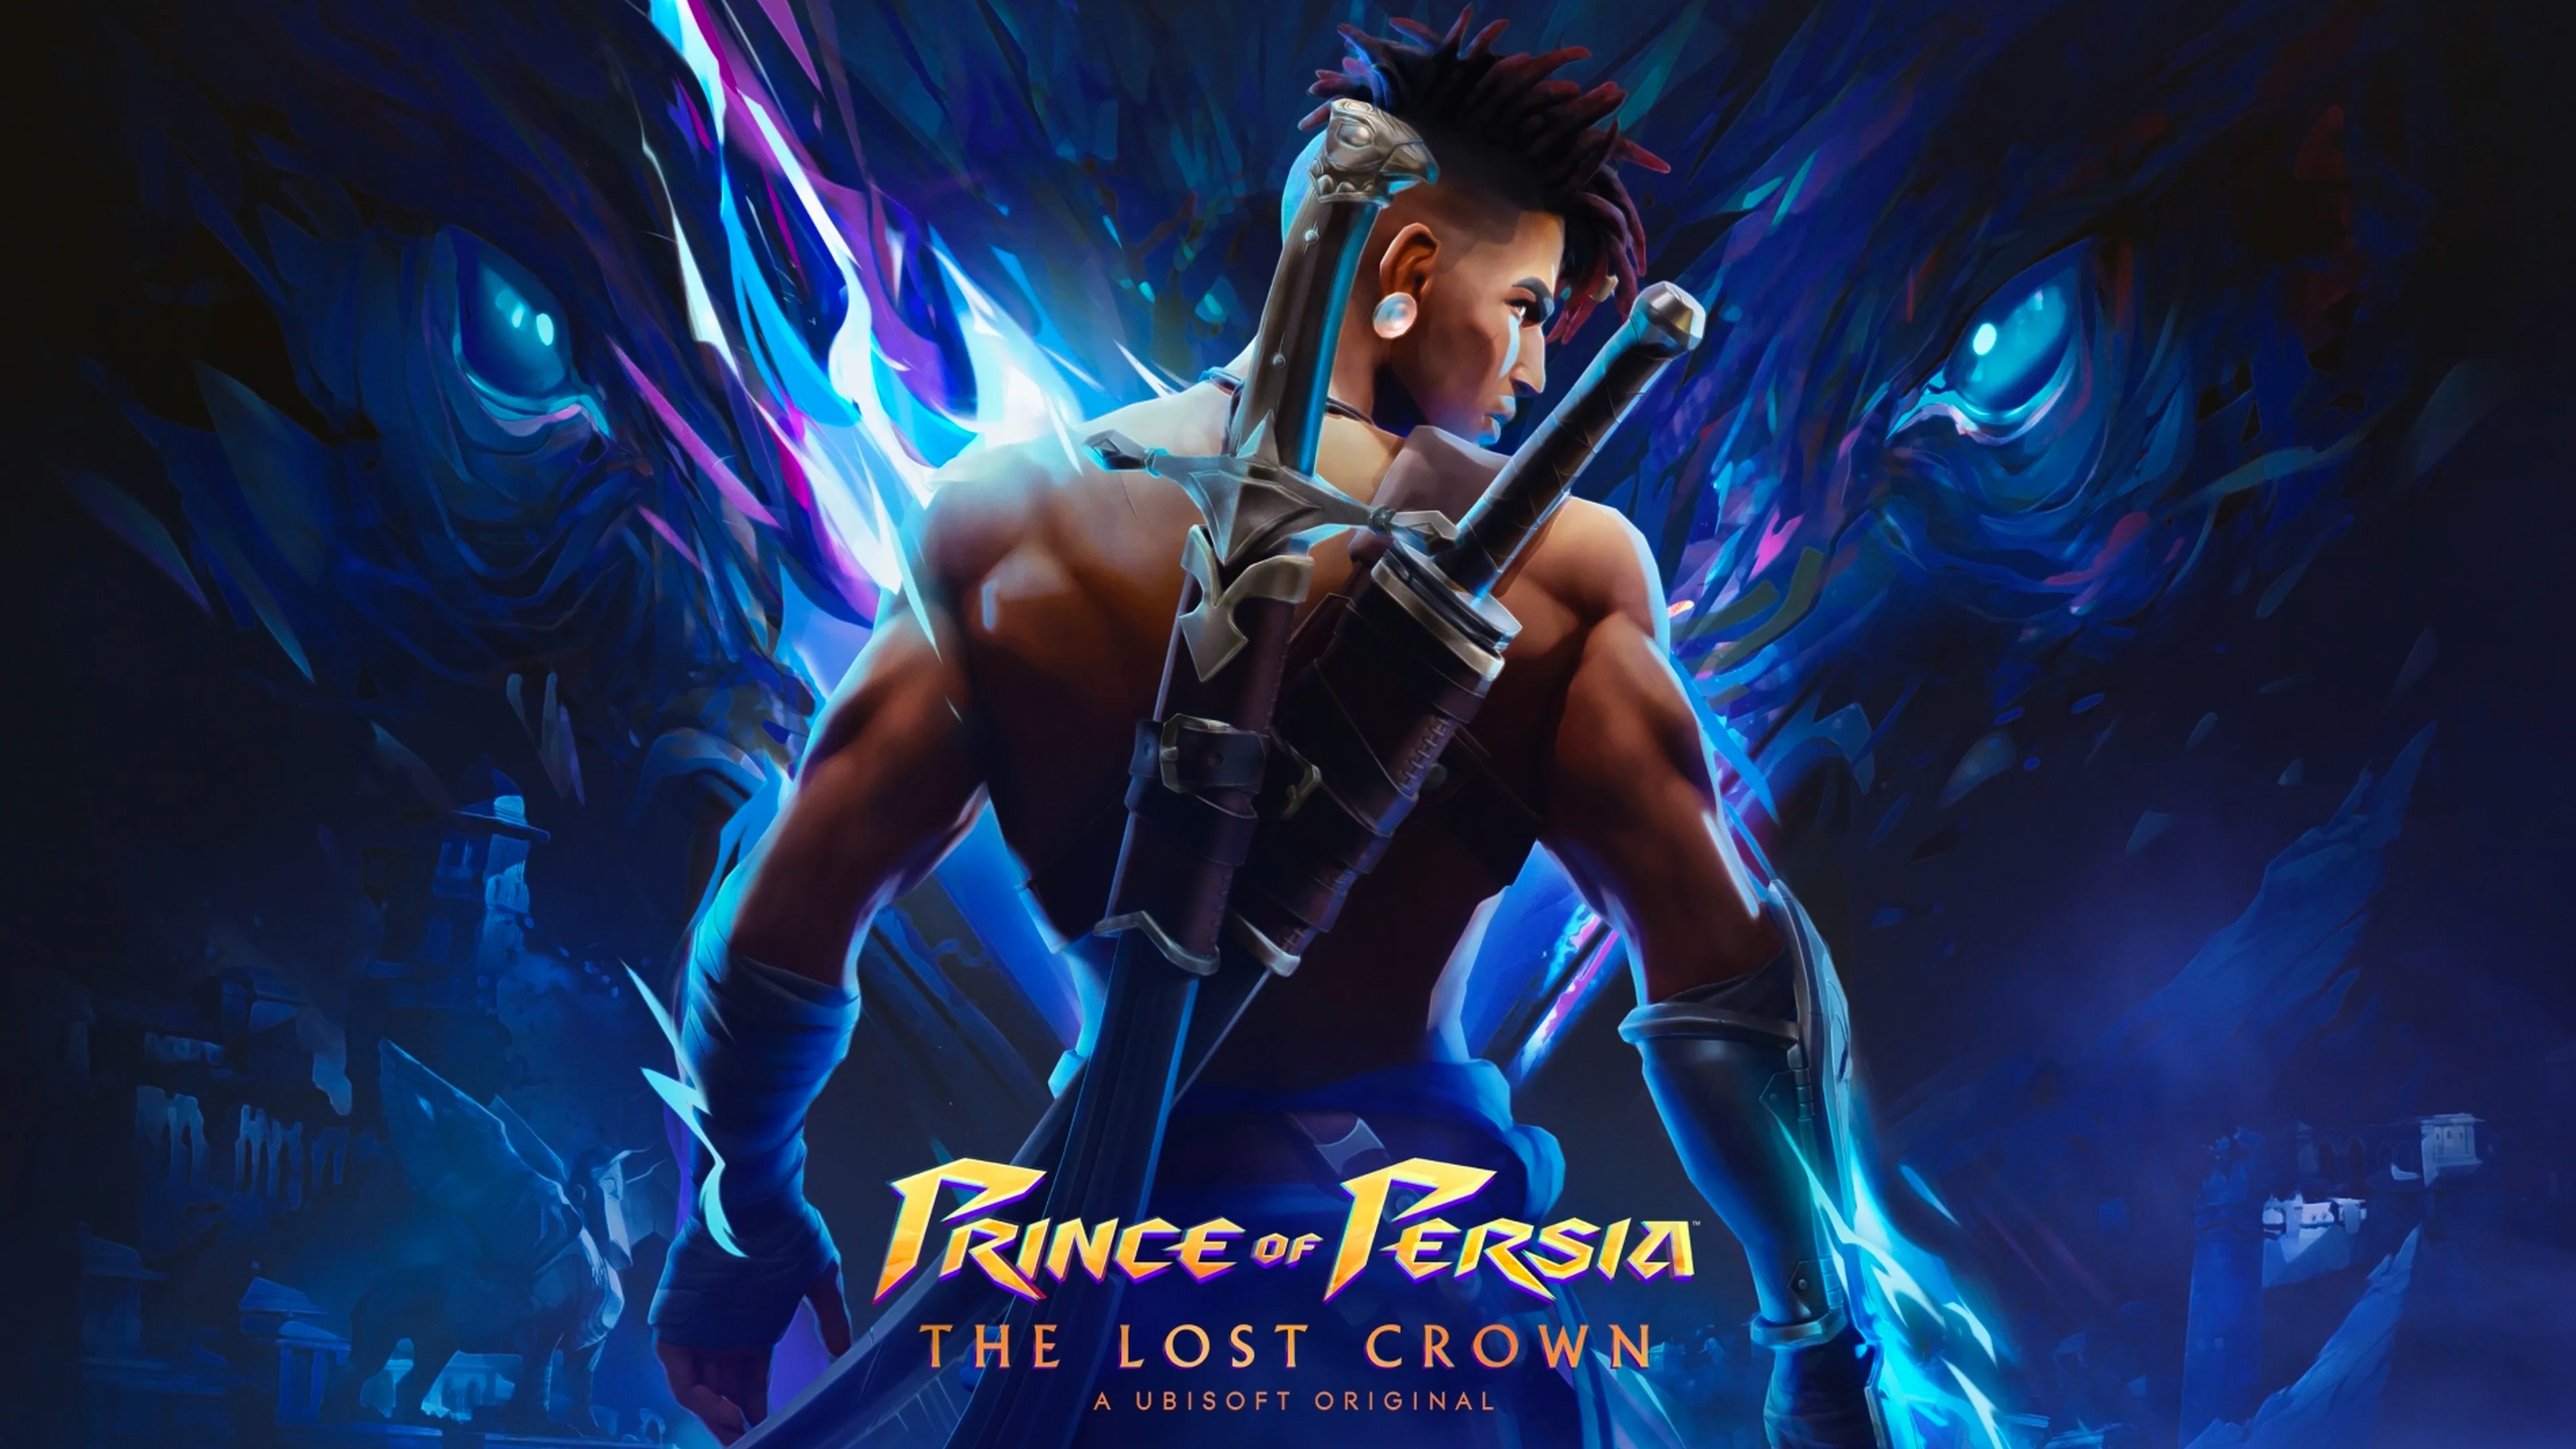 Buy Prince of Persia The Lost Crown Pre-Order Bonus - Microsoft Store en-SA